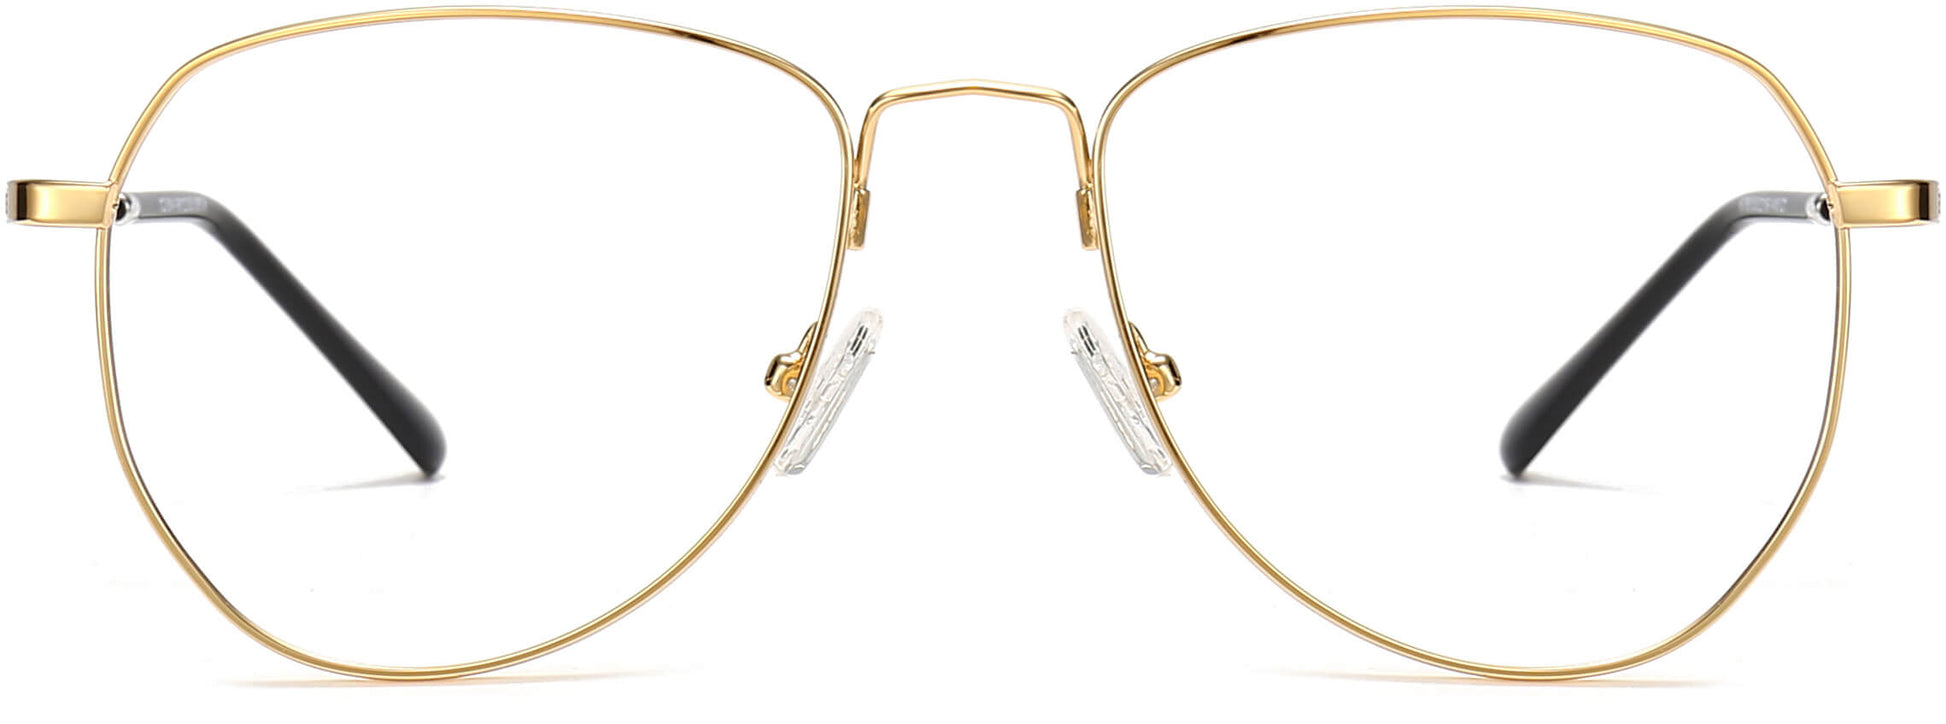 Devon Aviator Gold Eyeglasses from ANRRI, front view